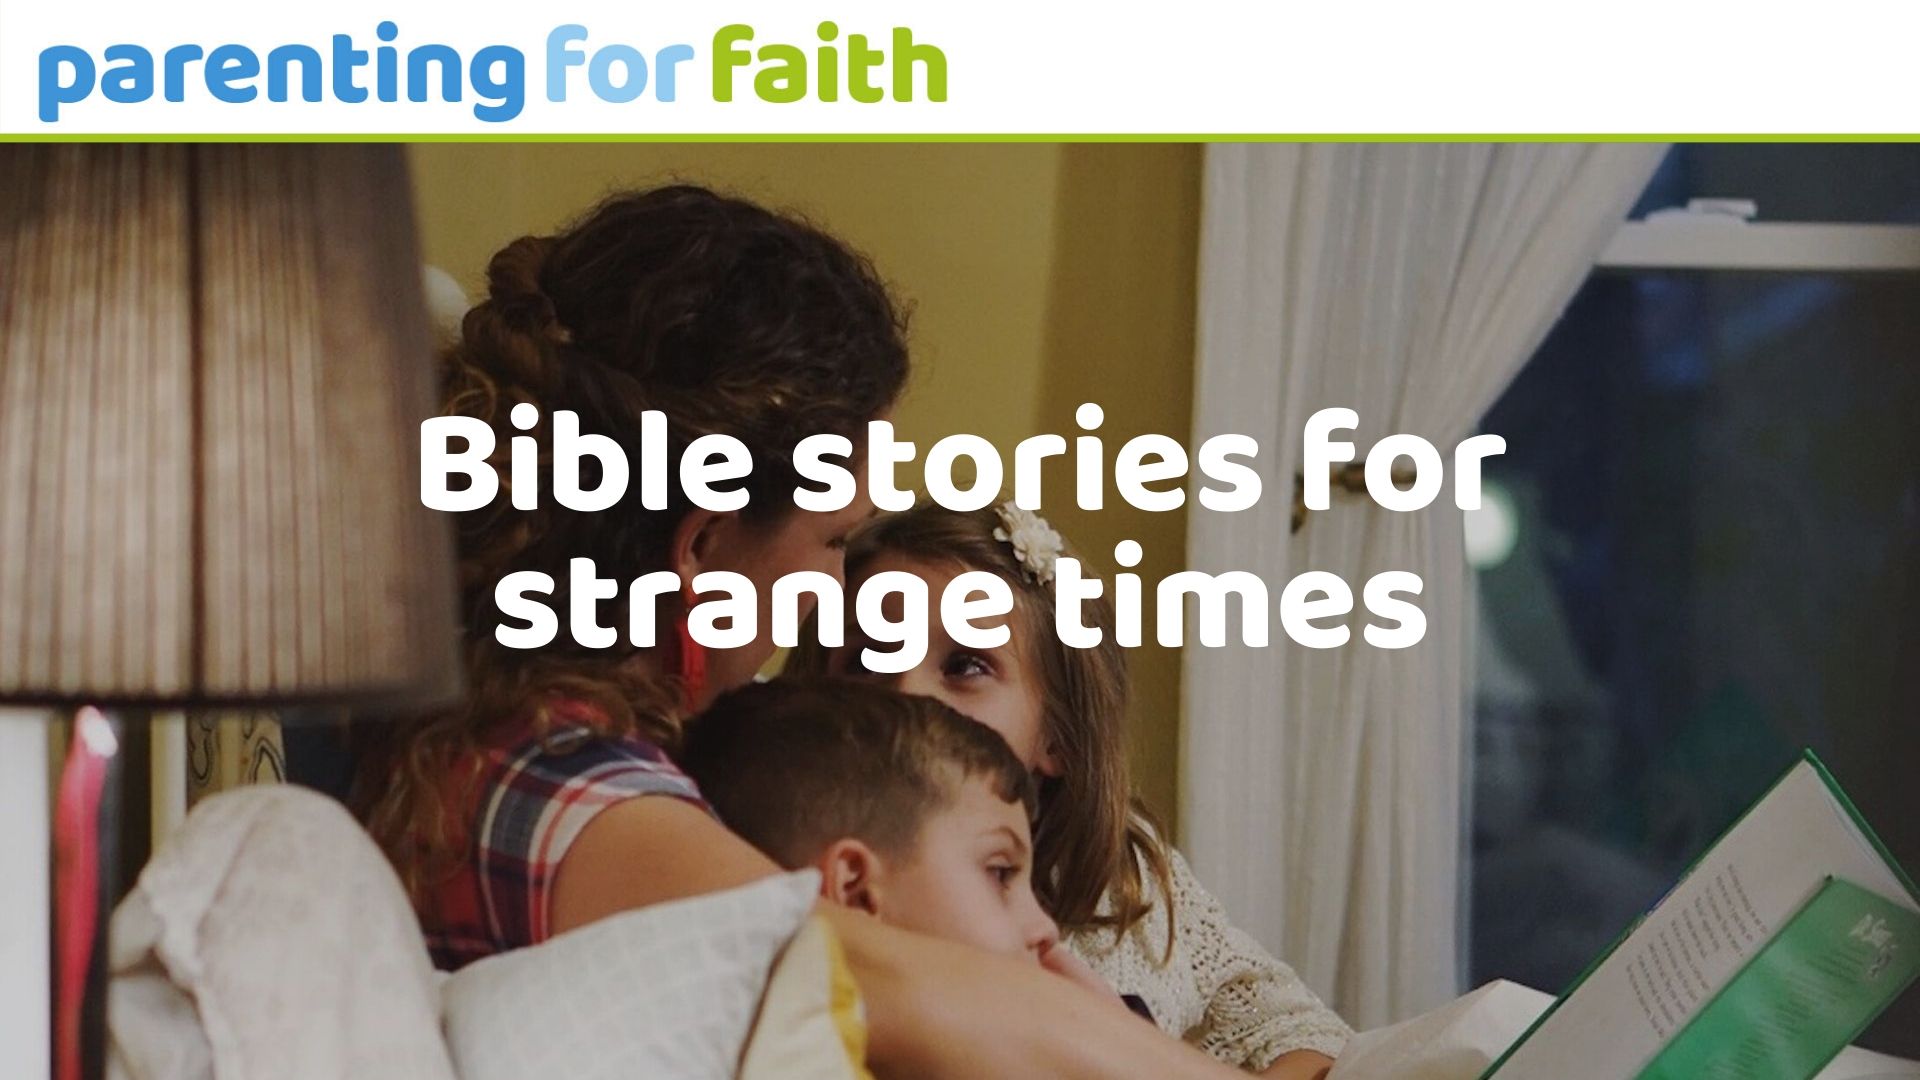 bible stories for strange times OG image 1920 x 1080px 2